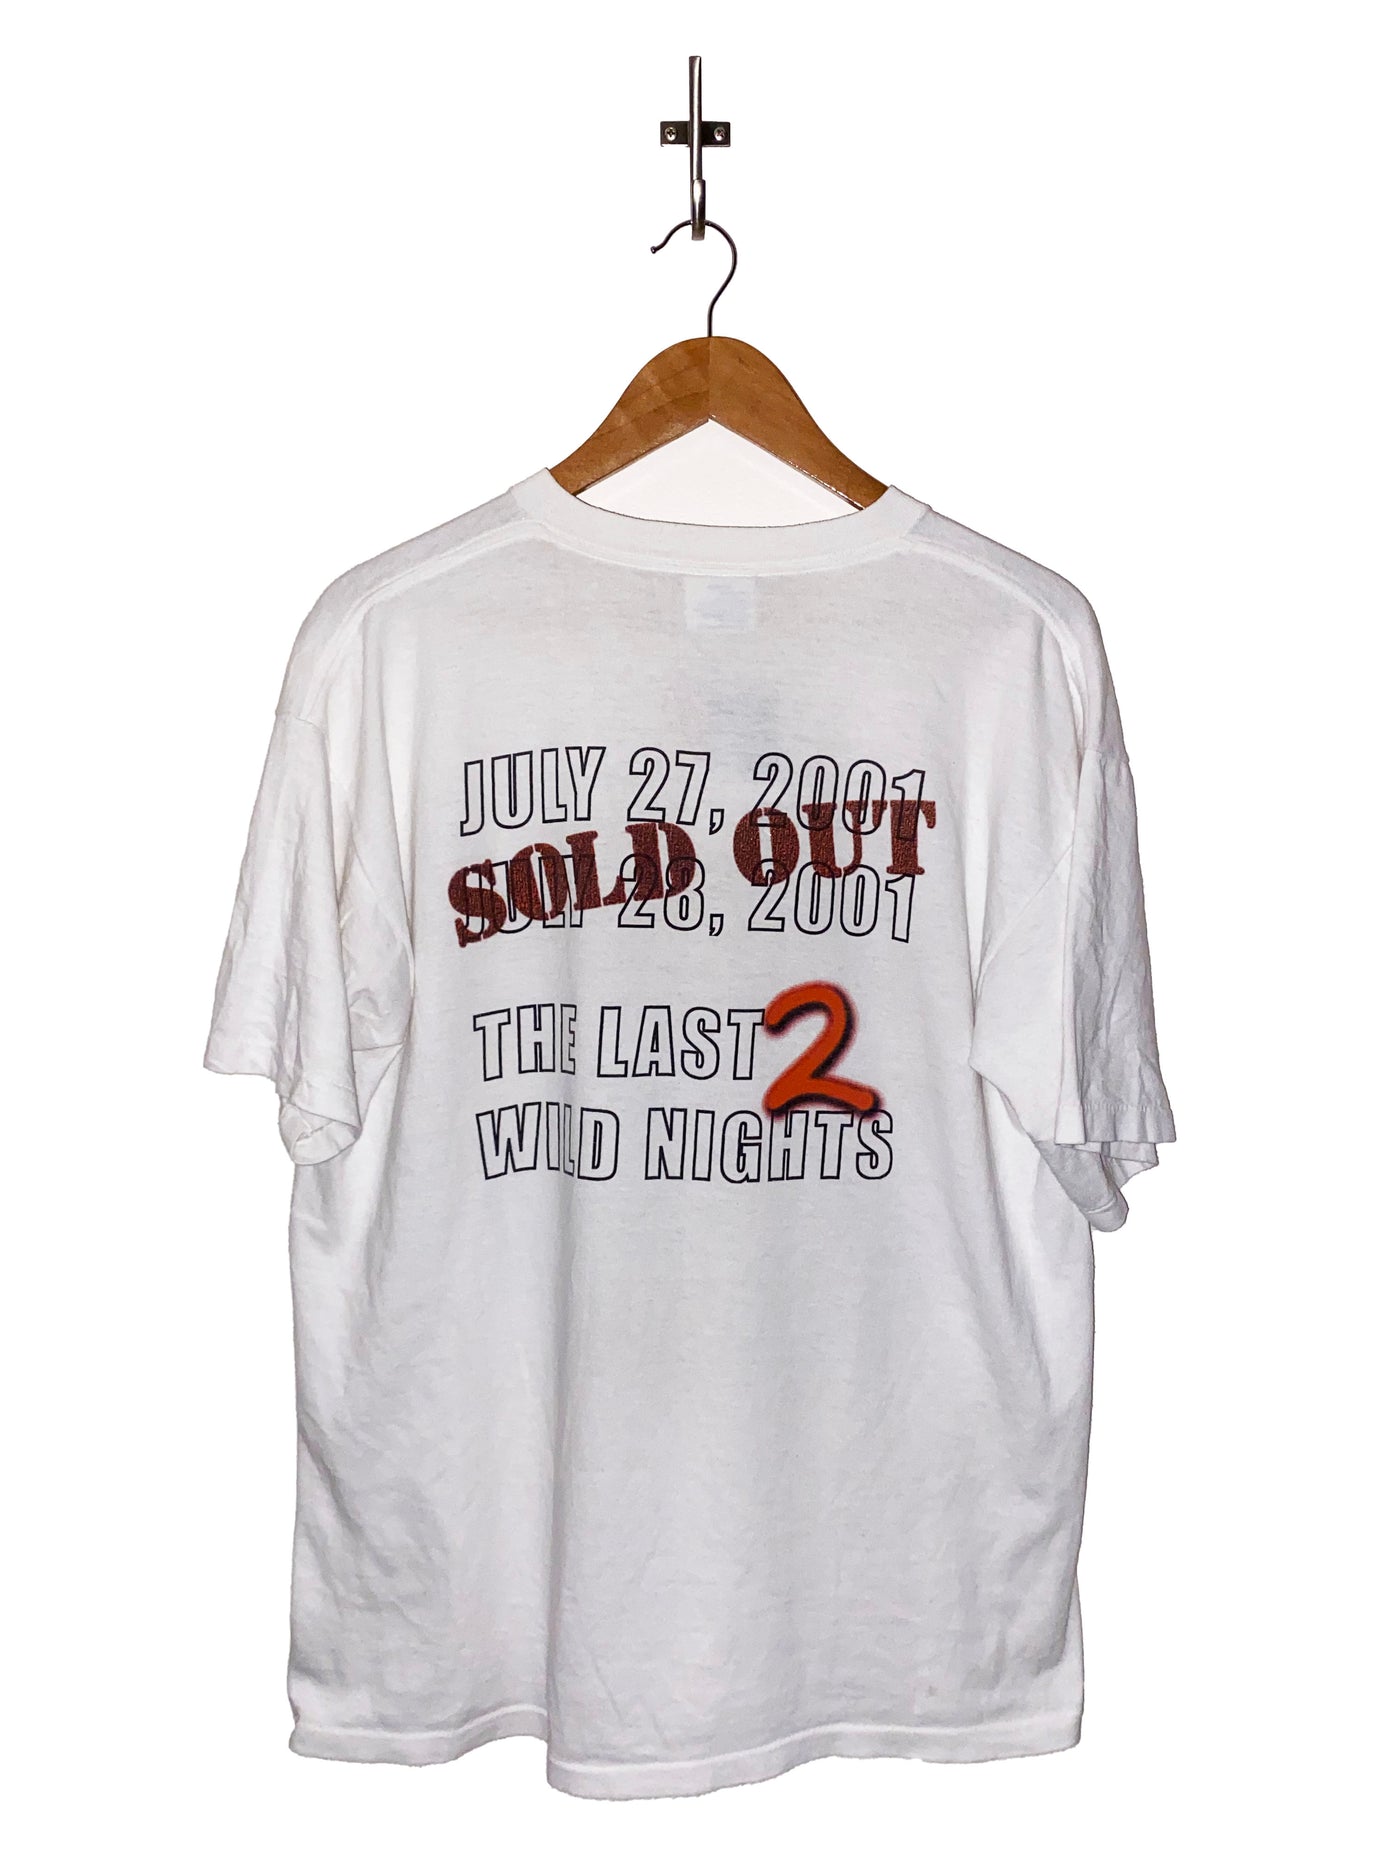 Vintage Bon Jovi One Wild Night Tour T-Shirt